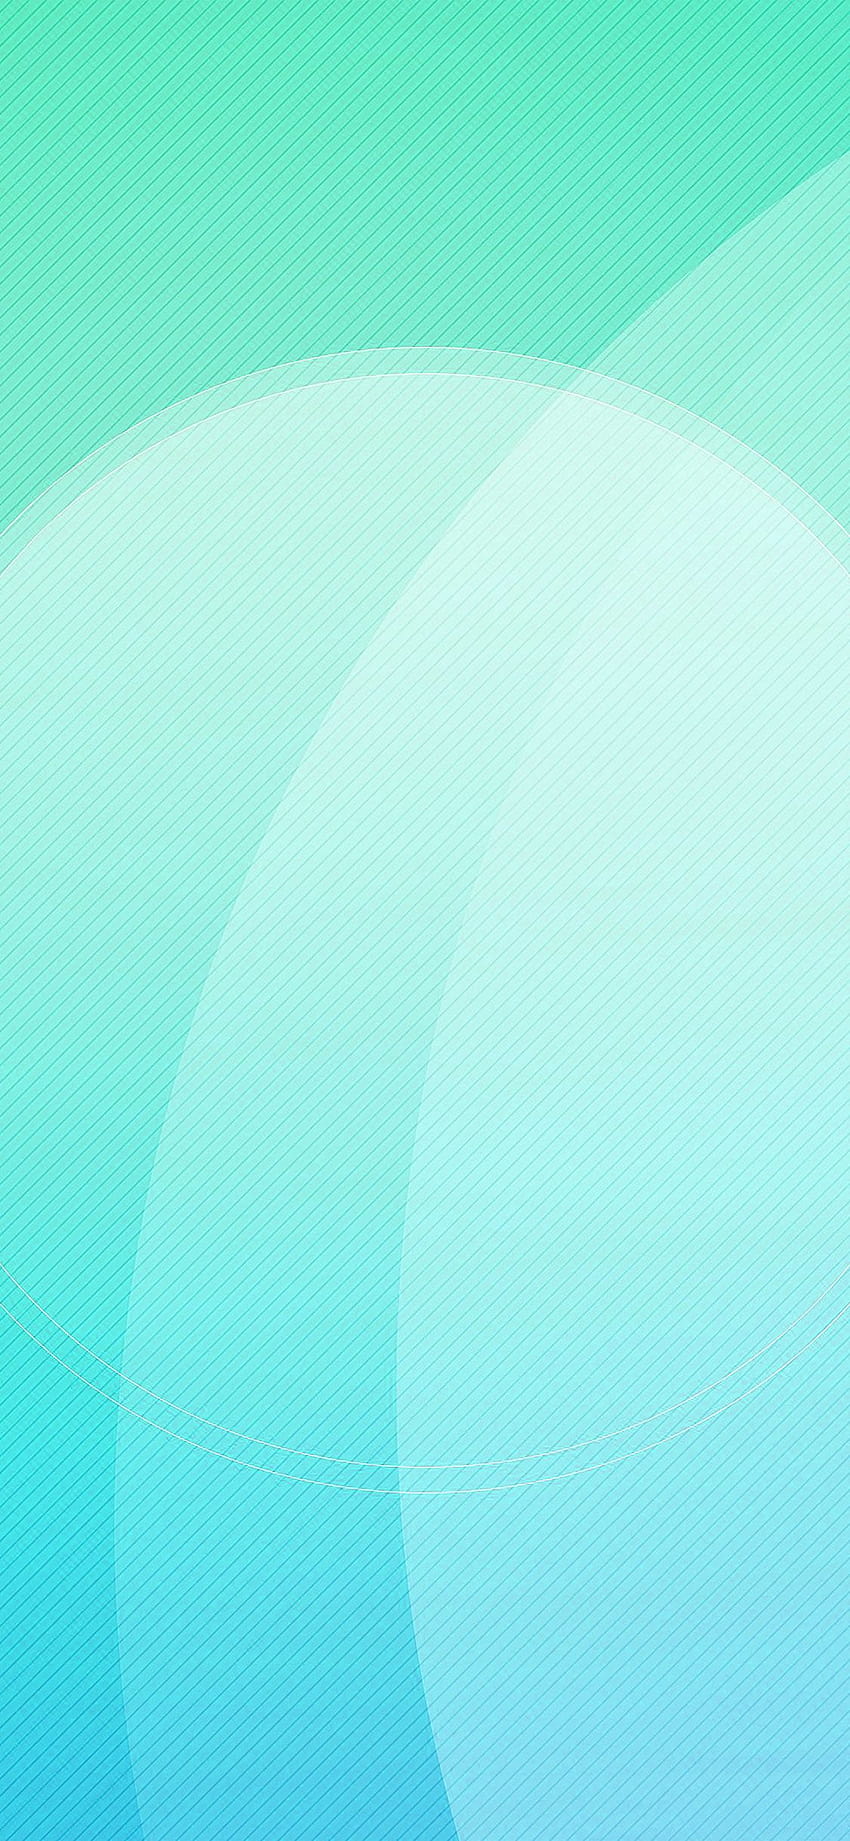 Lingkaran terbaik iPhone X, biru hijau wallpaper ponsel HD